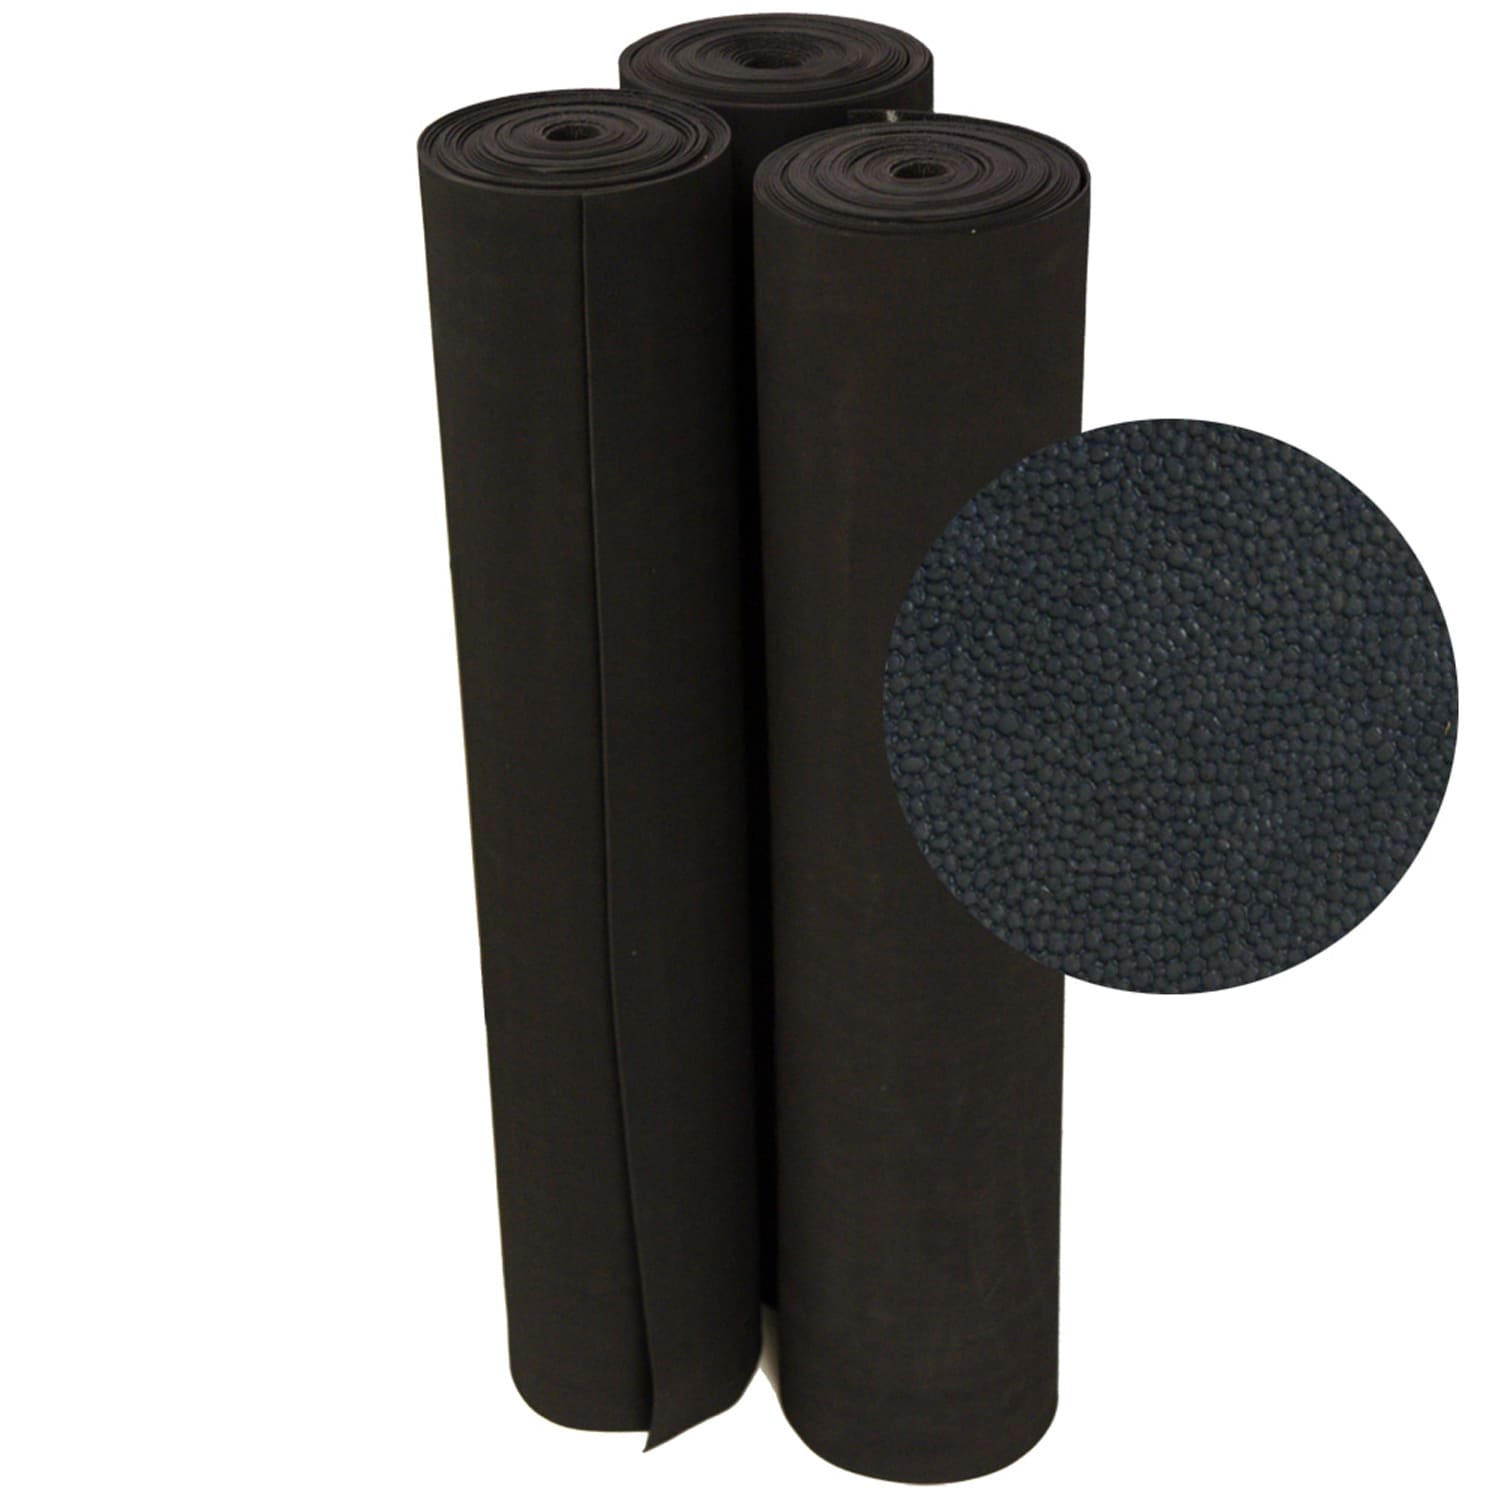 Rolled covering. Резиновый черный. Большой черный резиновый. Черная резина. Rubber Roller covering.